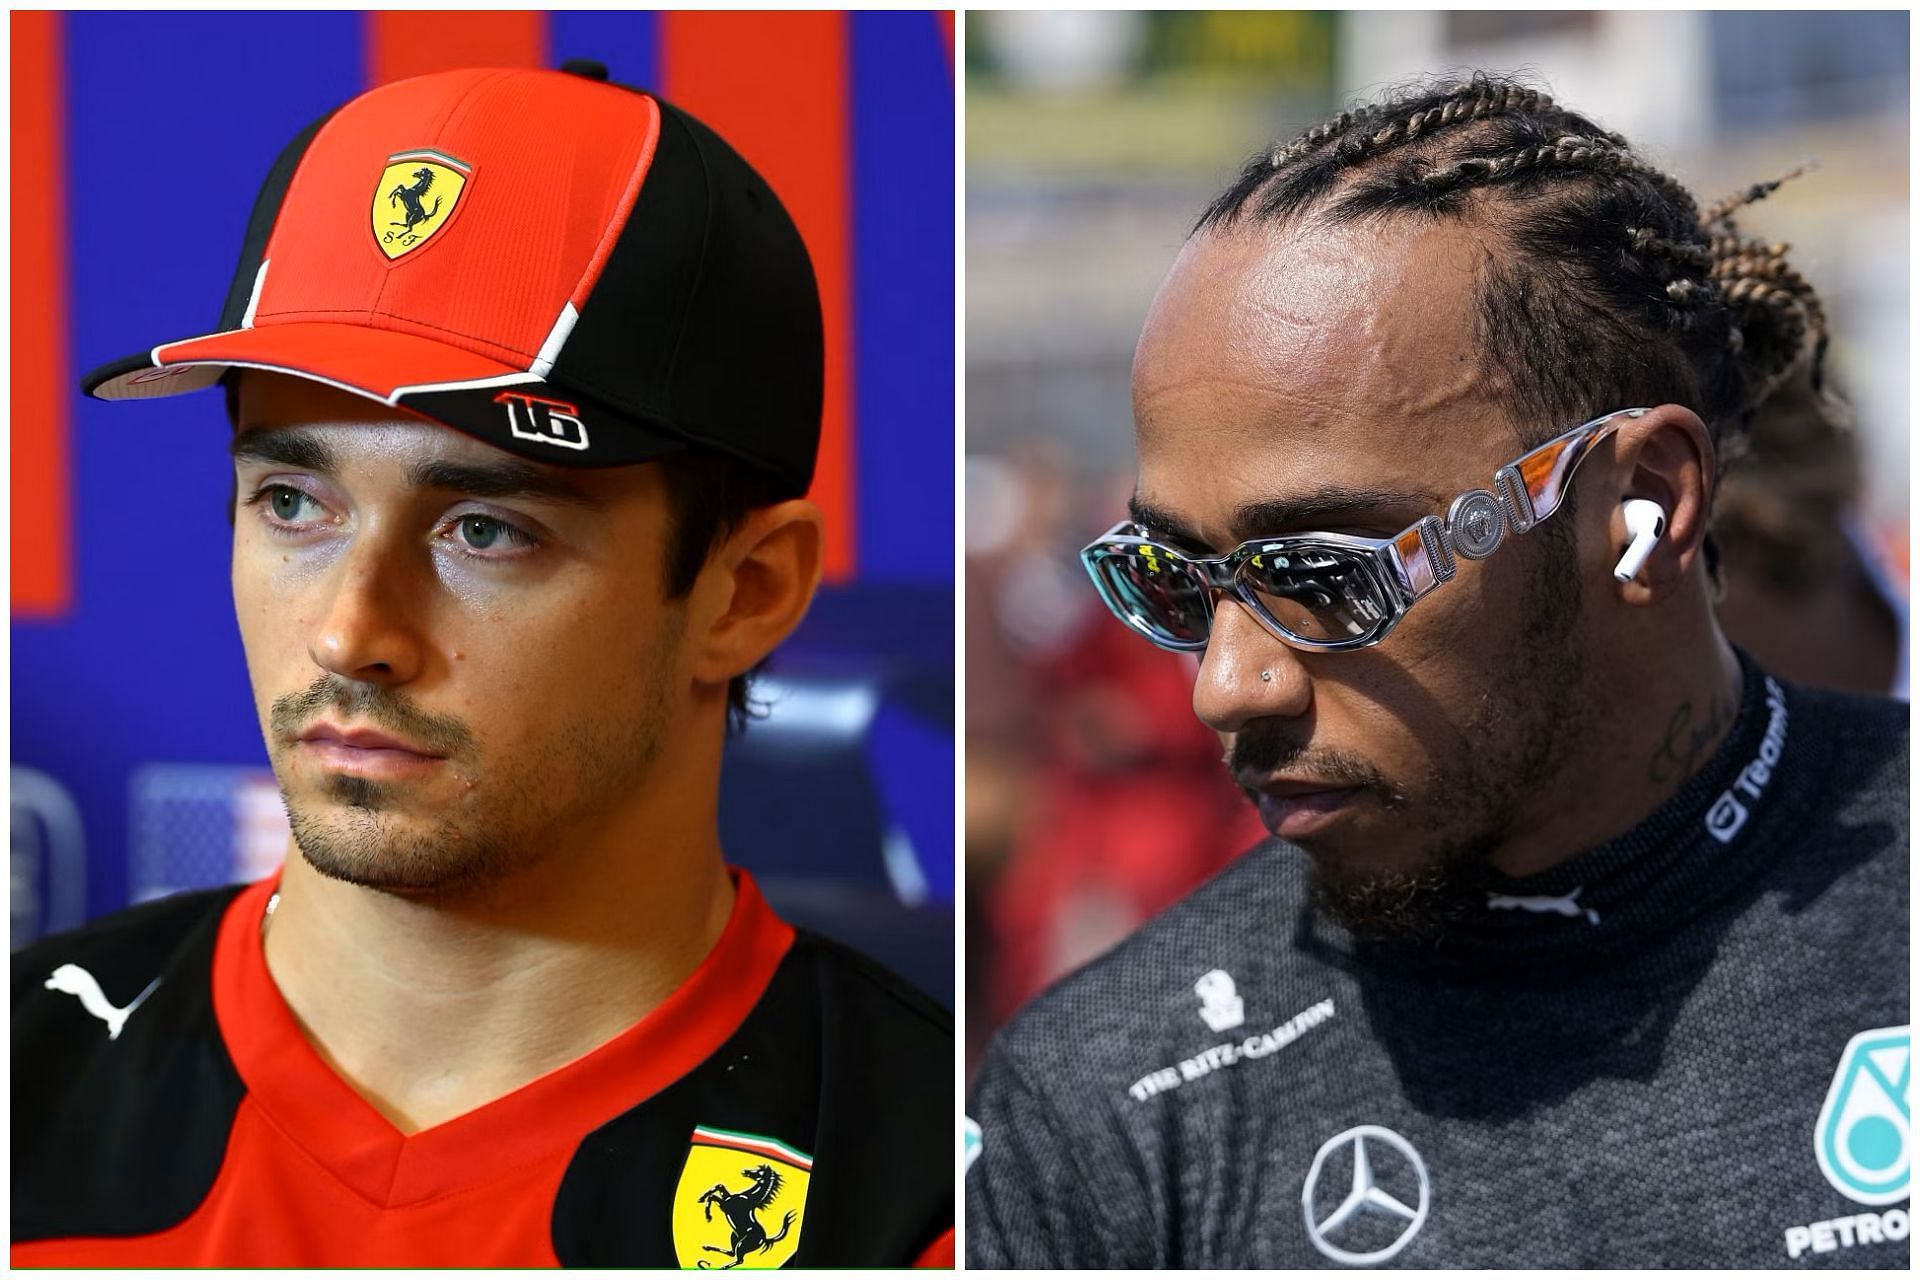 Charles Leclerc (L) and Lewis Hamilton (R) (Collage via Sportskeeda)